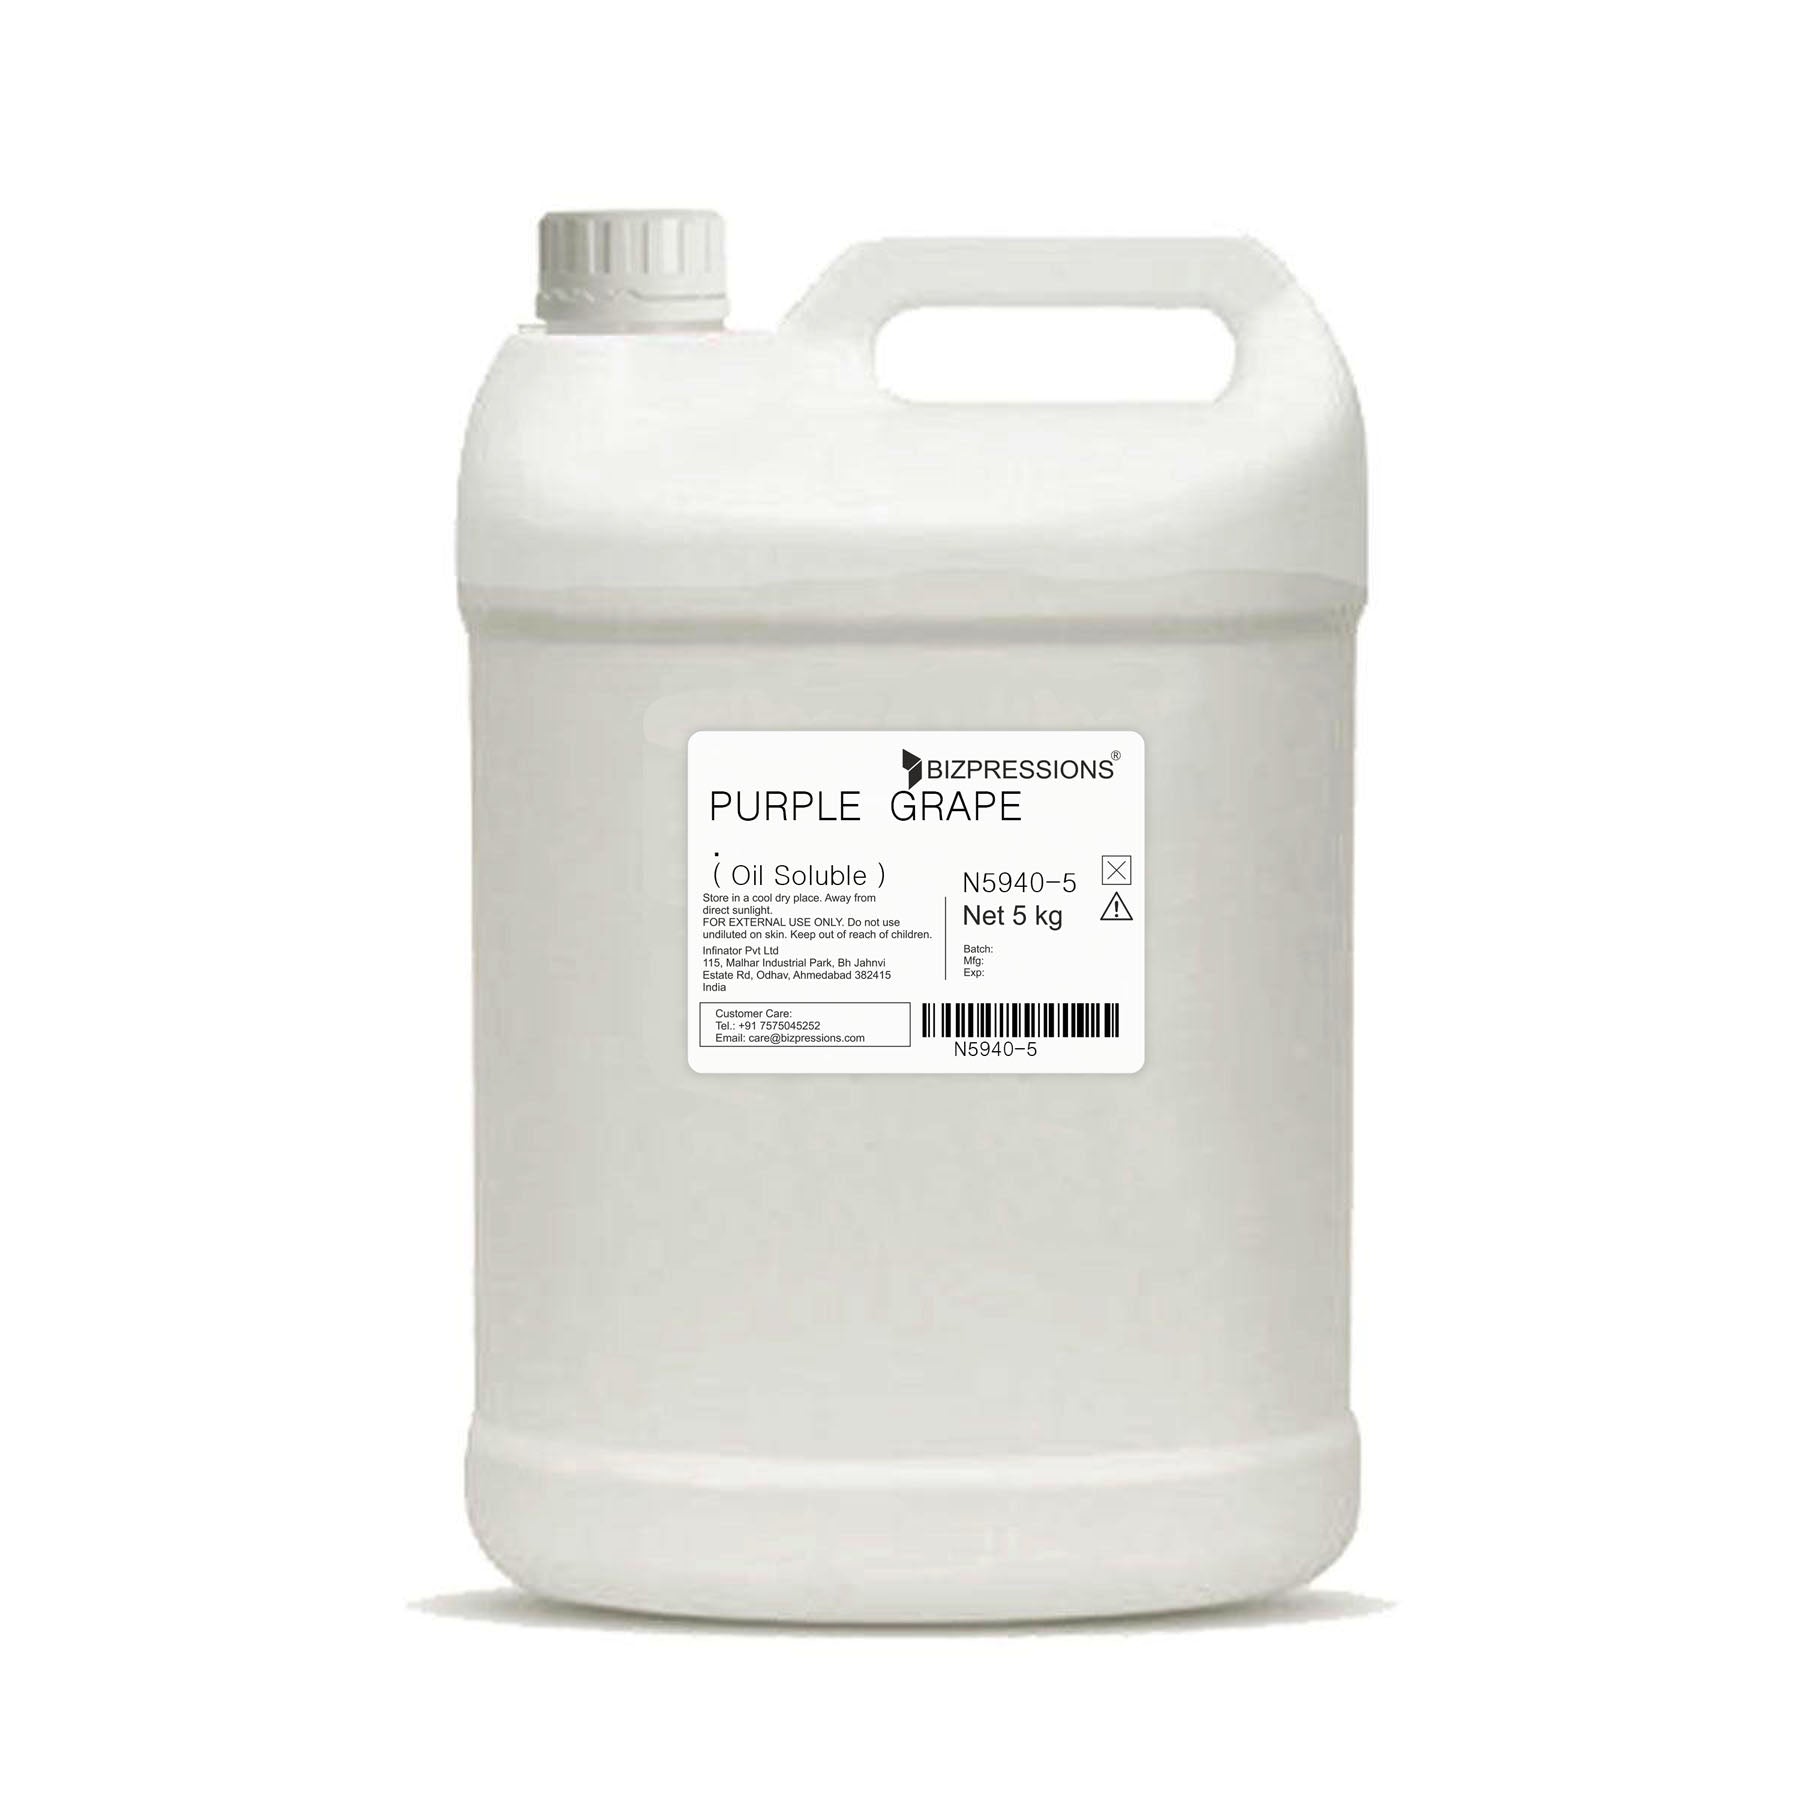 PURPLE GRAPE - Fragrance ( Oil Soluble ) - 5 kg